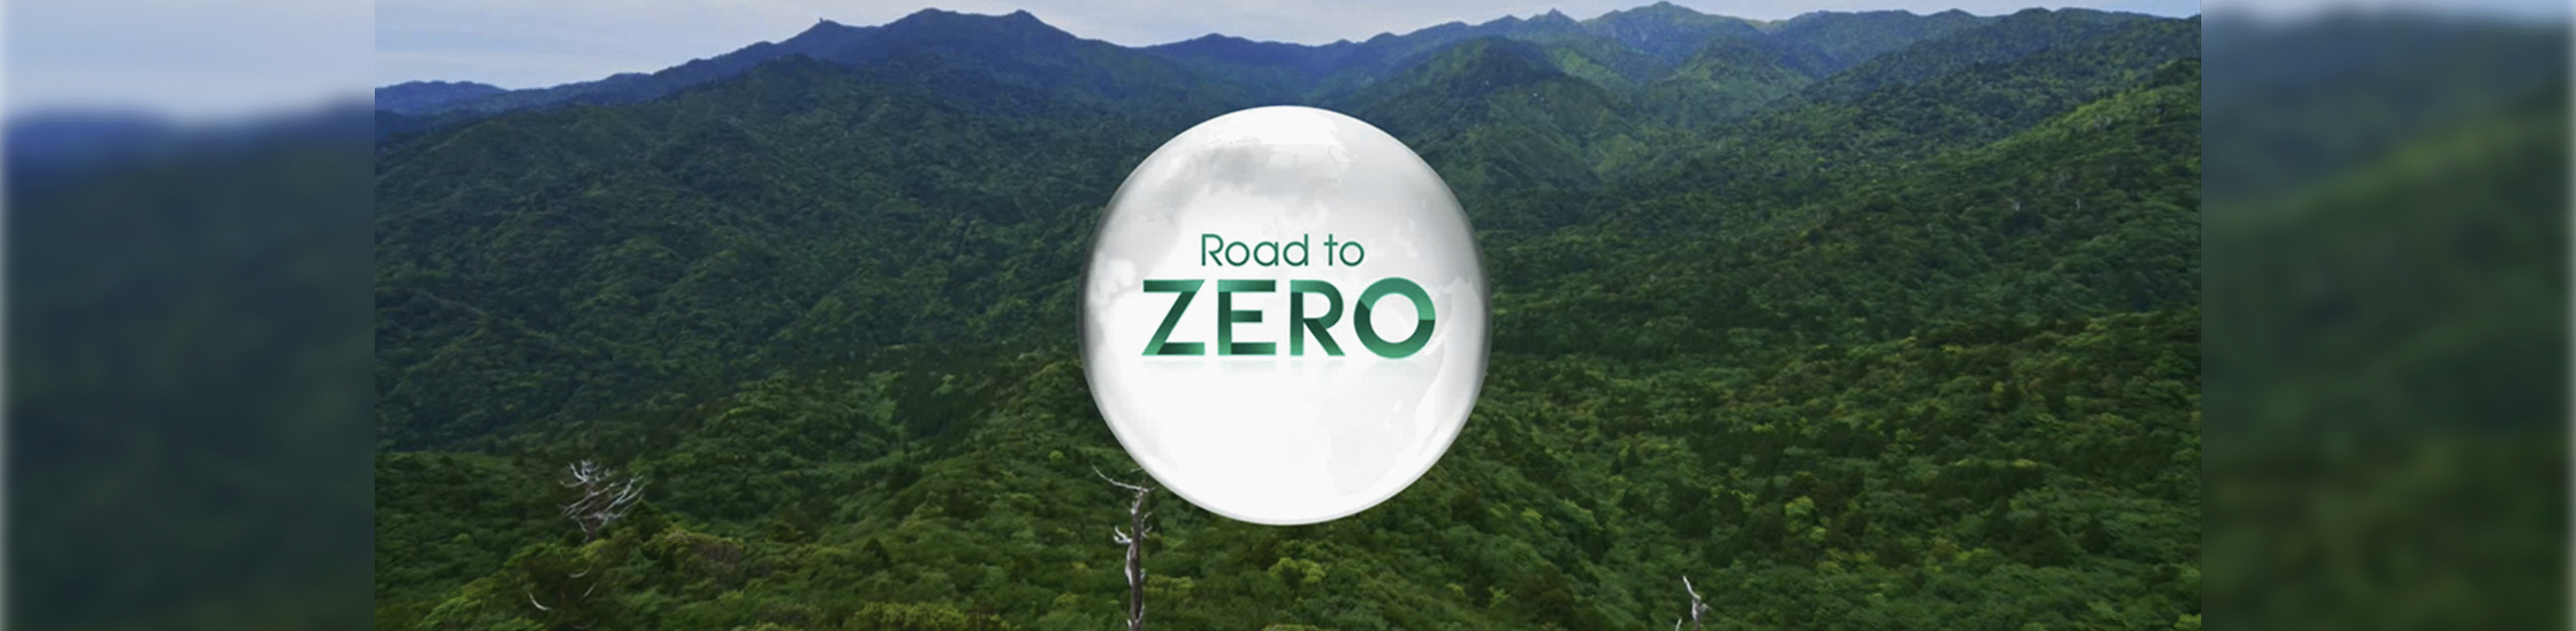 Logotip Road to ZERO